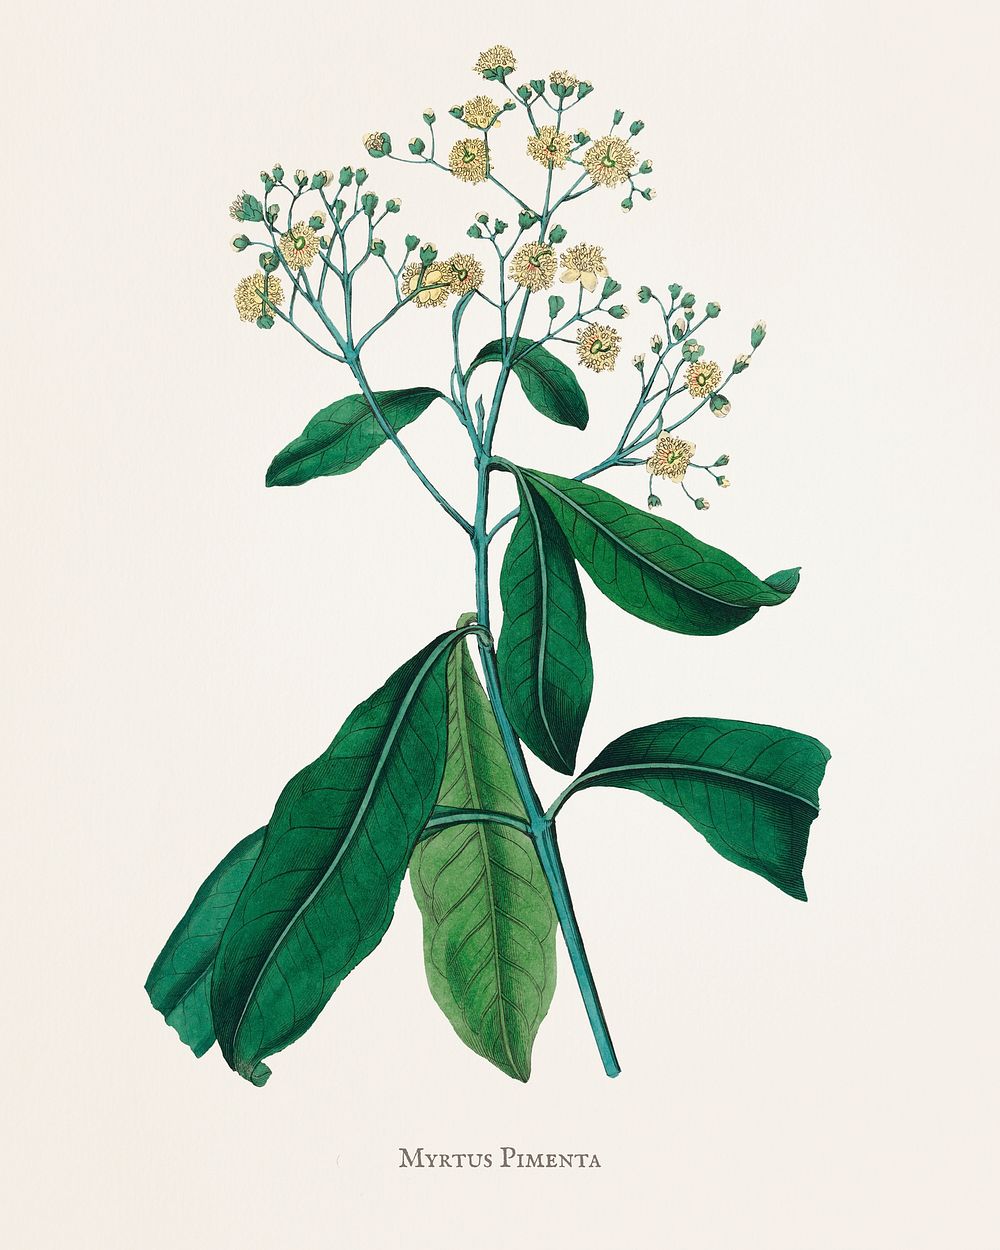 Allspice (Myrtus pimenta) illustration from Medical Botany (1836) by John Stephenson and James Morss Churchill.